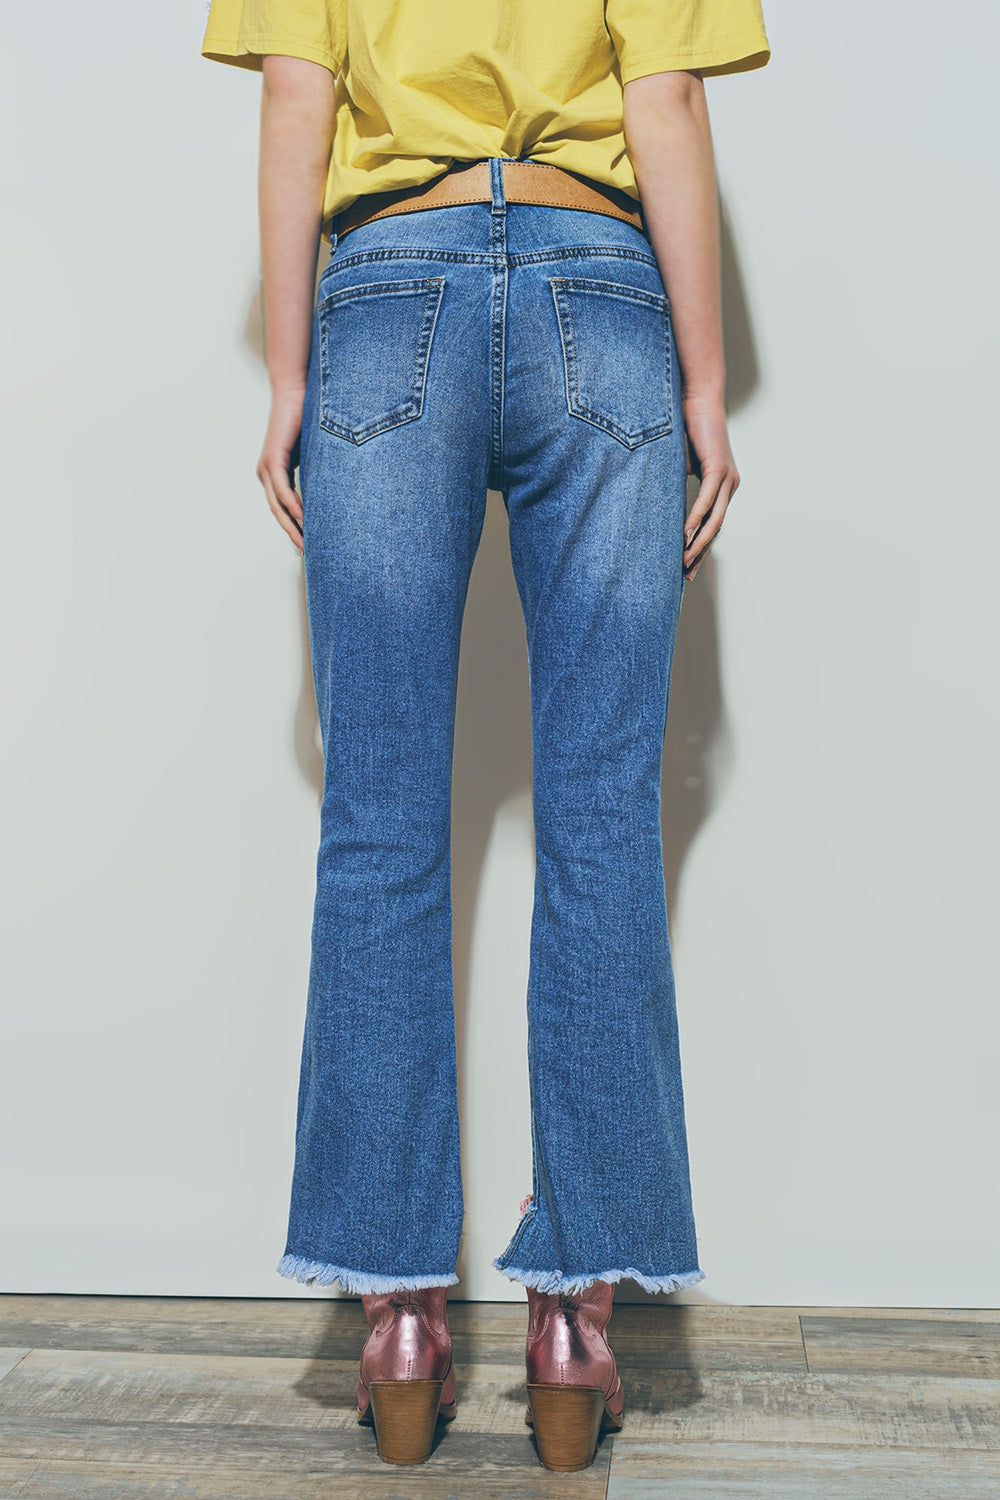 Straight Distressed Jeans in Medium Wash - Szua Store